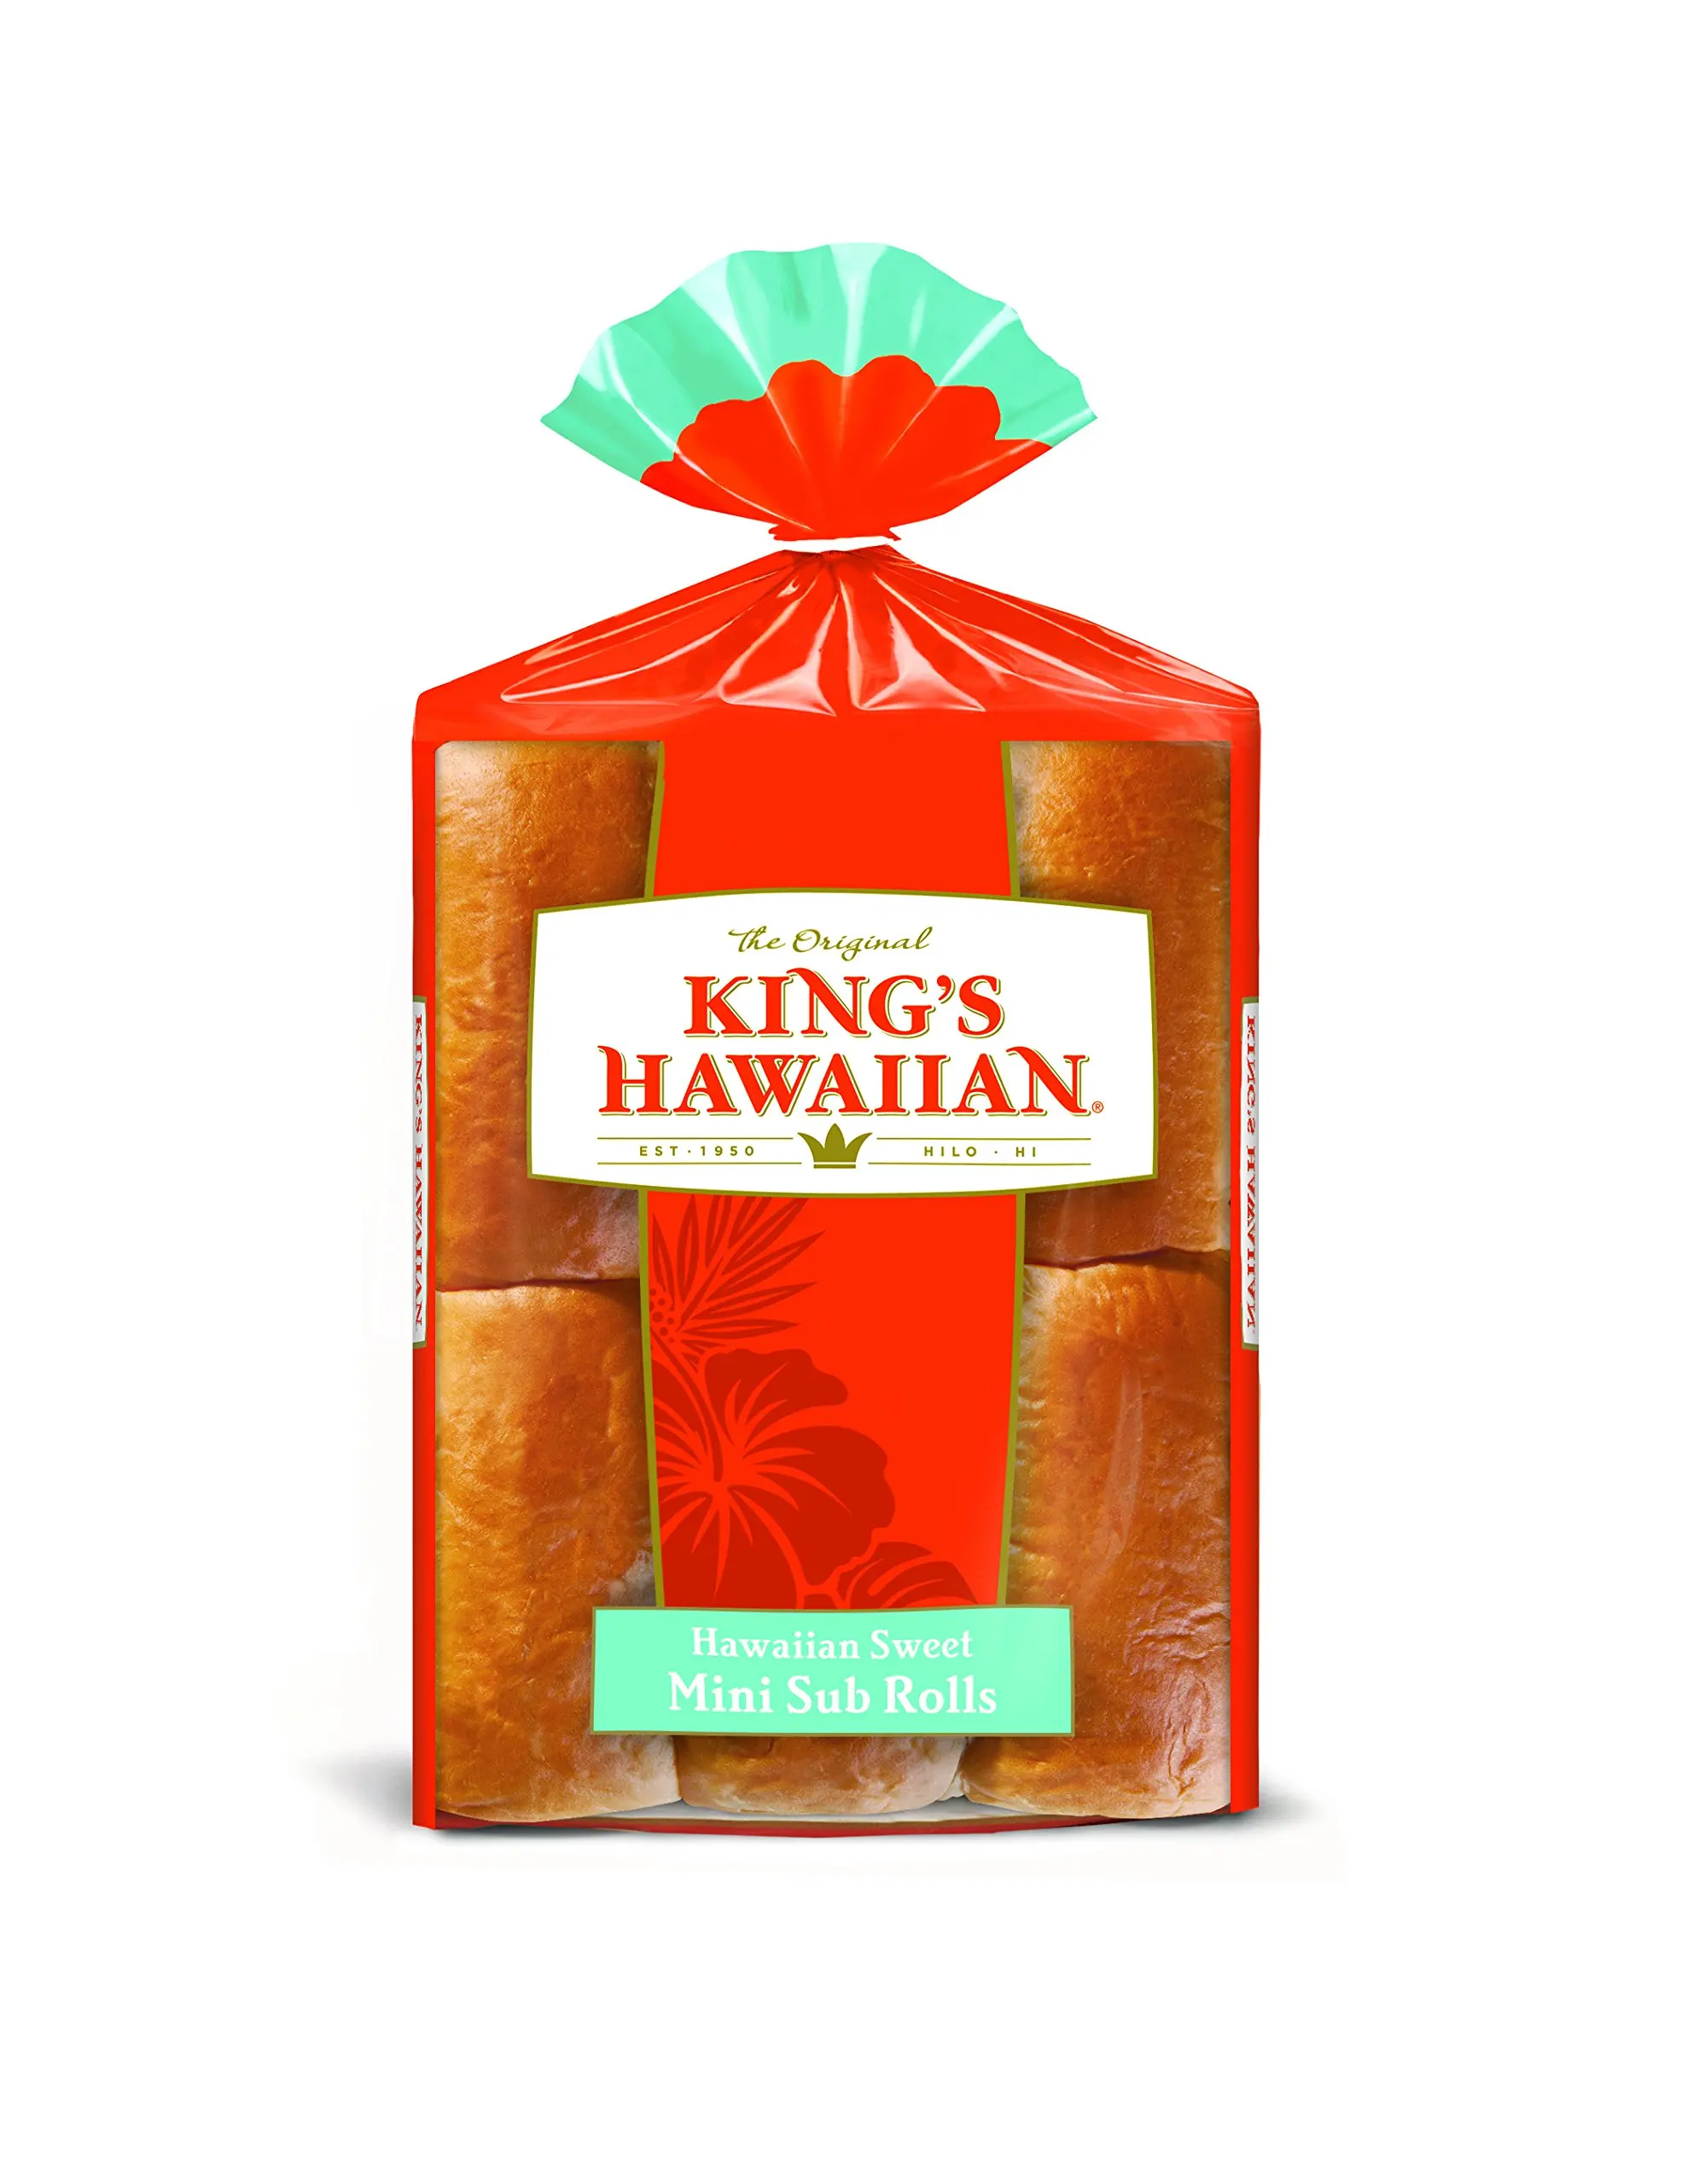 Can You Freeze King's Hawaiian Rolls